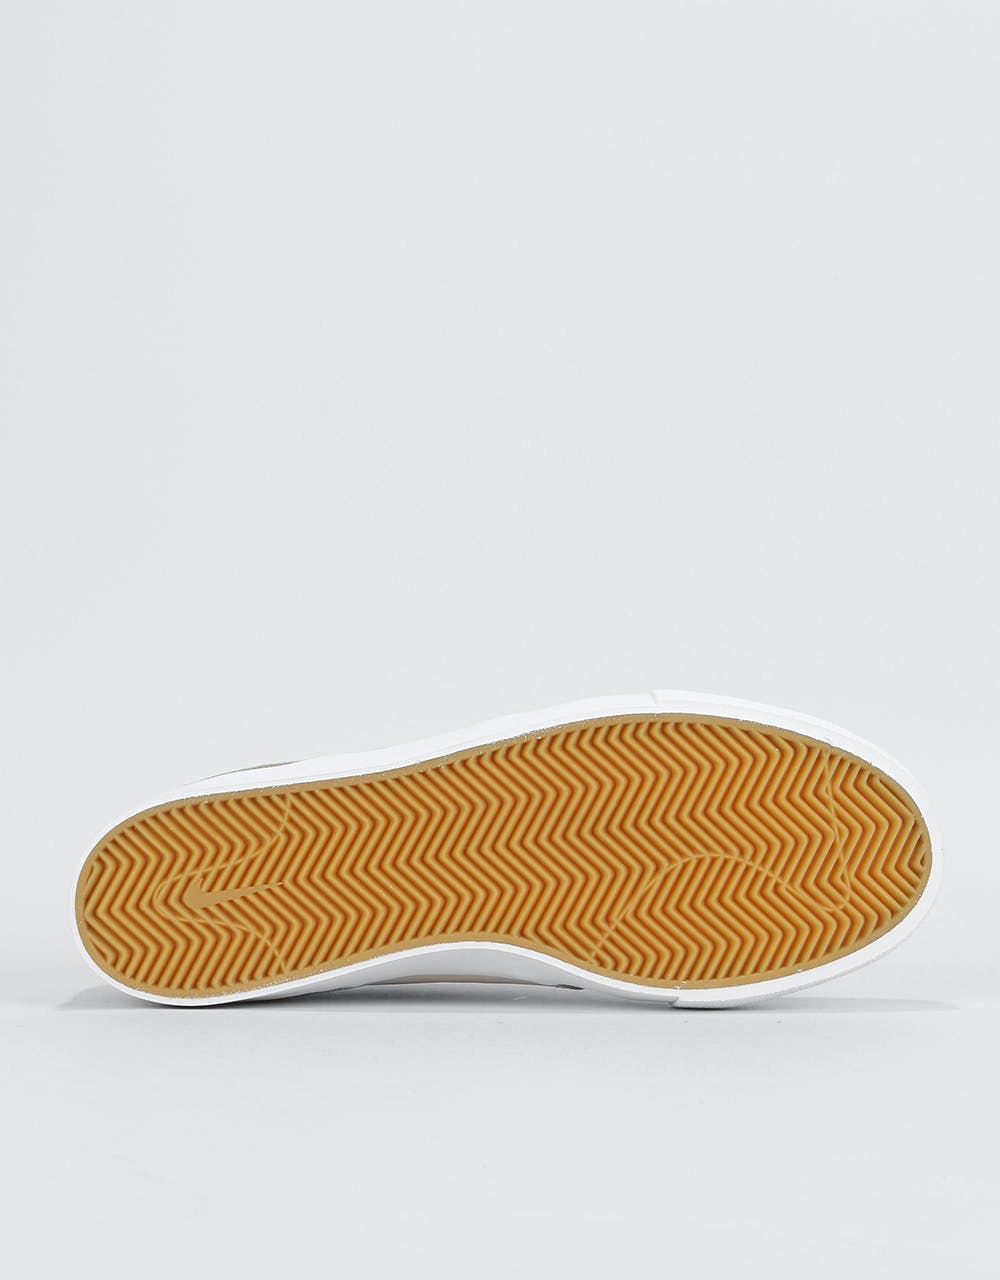 Nike SB Zoom Janoski RM Crafted Skate Shoes - Desert Sand/Desert Sand-